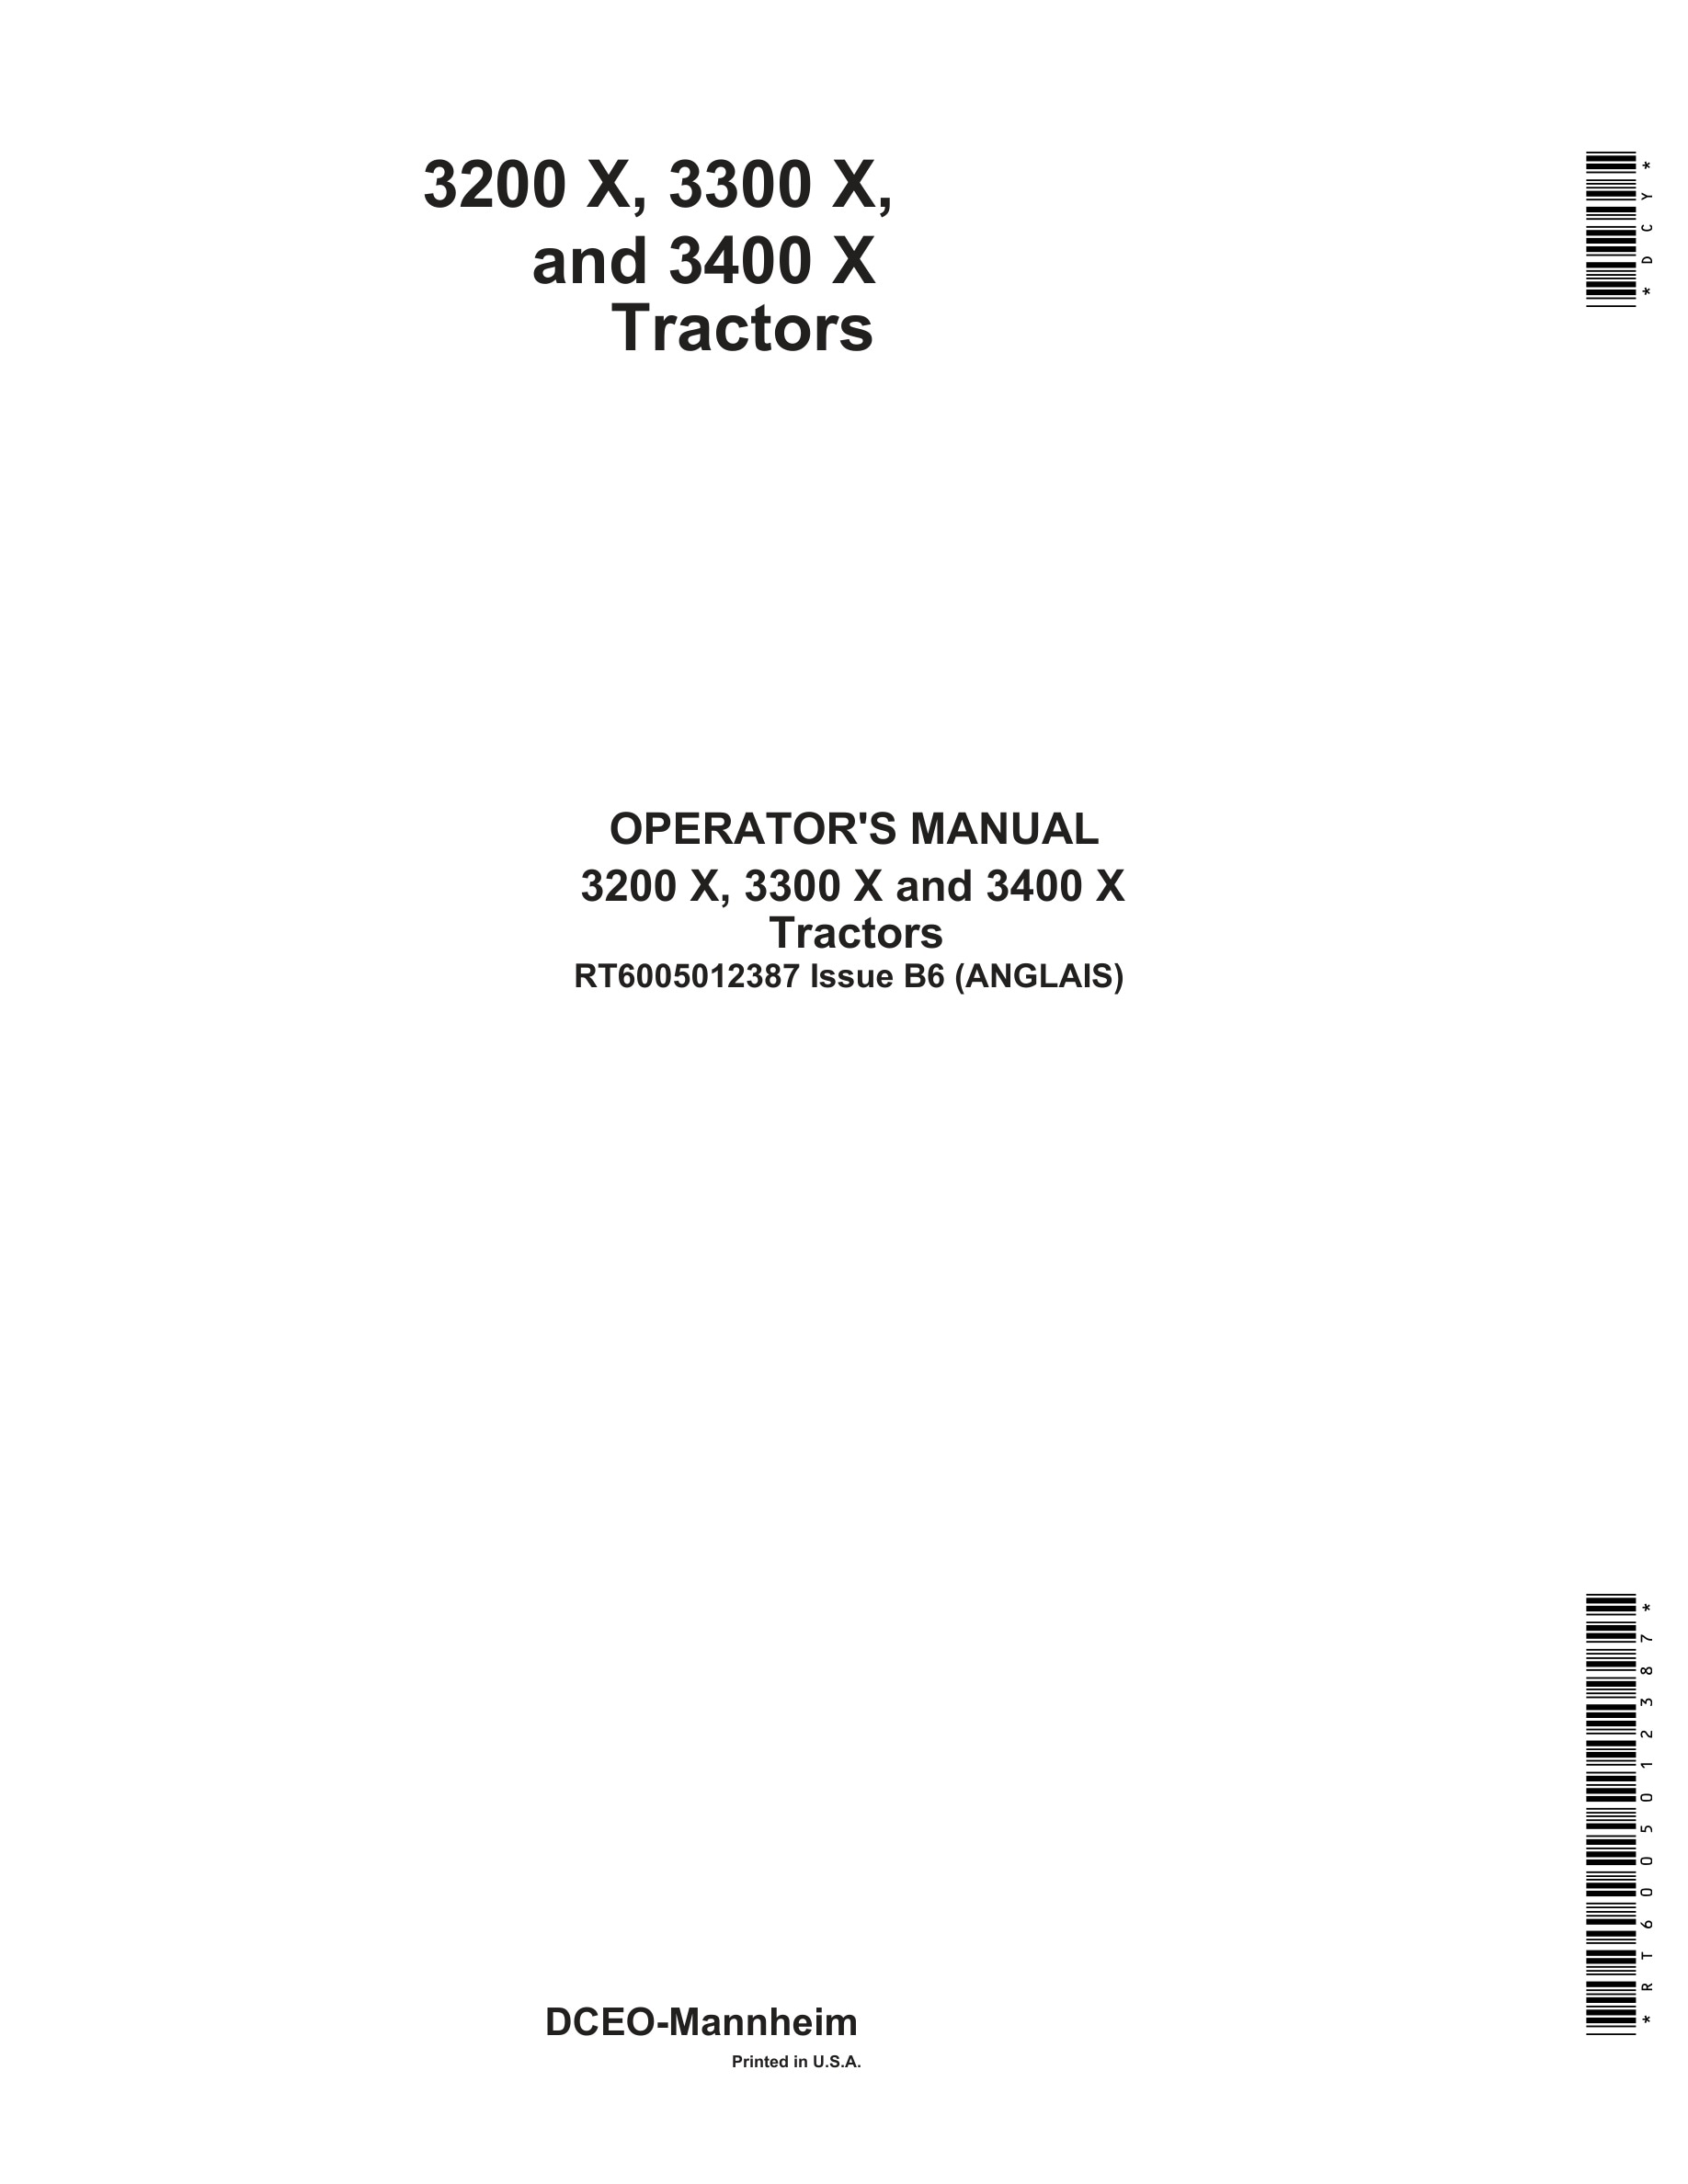 John Deere 3200 X, 3300 X And 3400 X Tractors Operator Manuals Rt6005012387-1